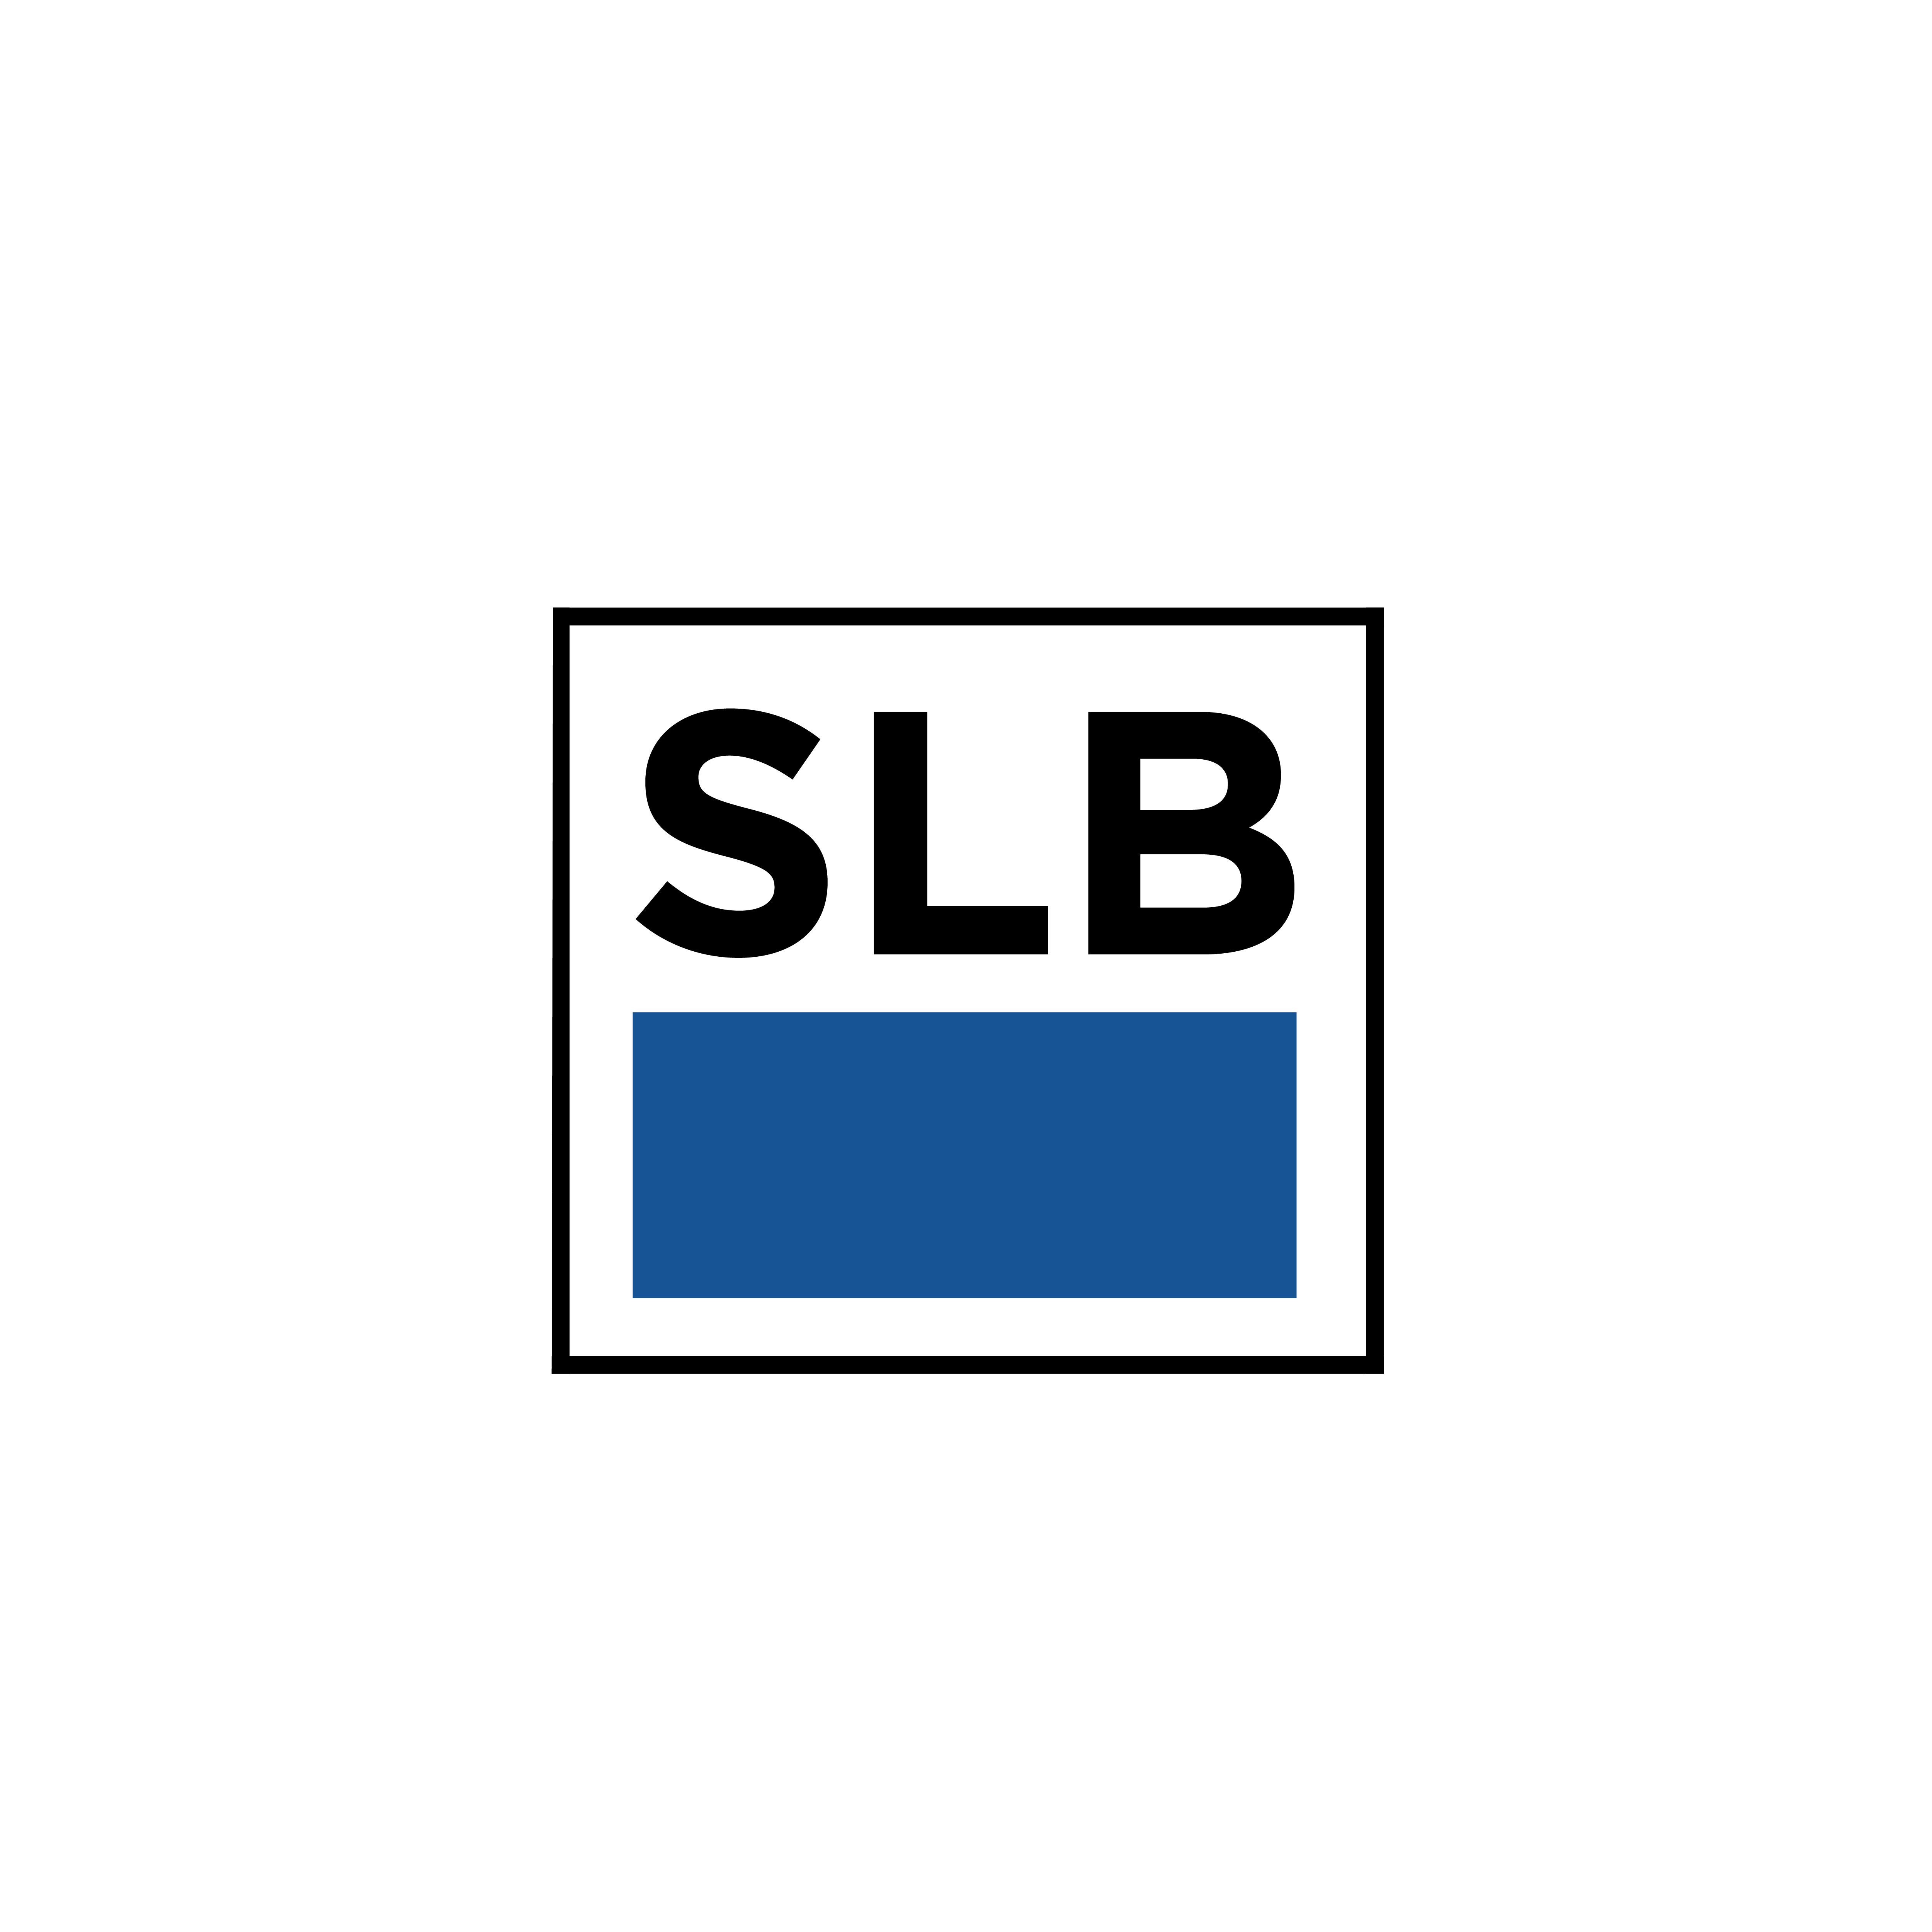 SLB Insurance Group logo